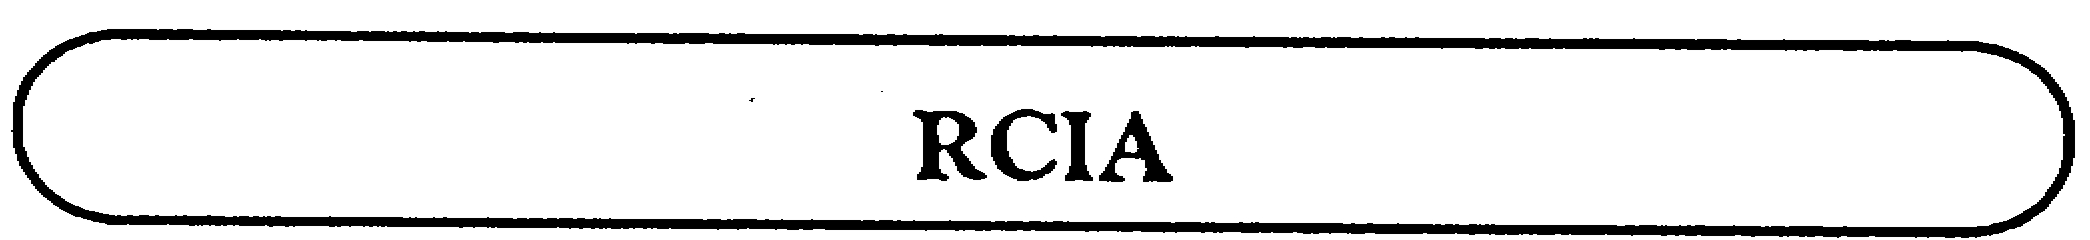 RCIA-OCIA_6